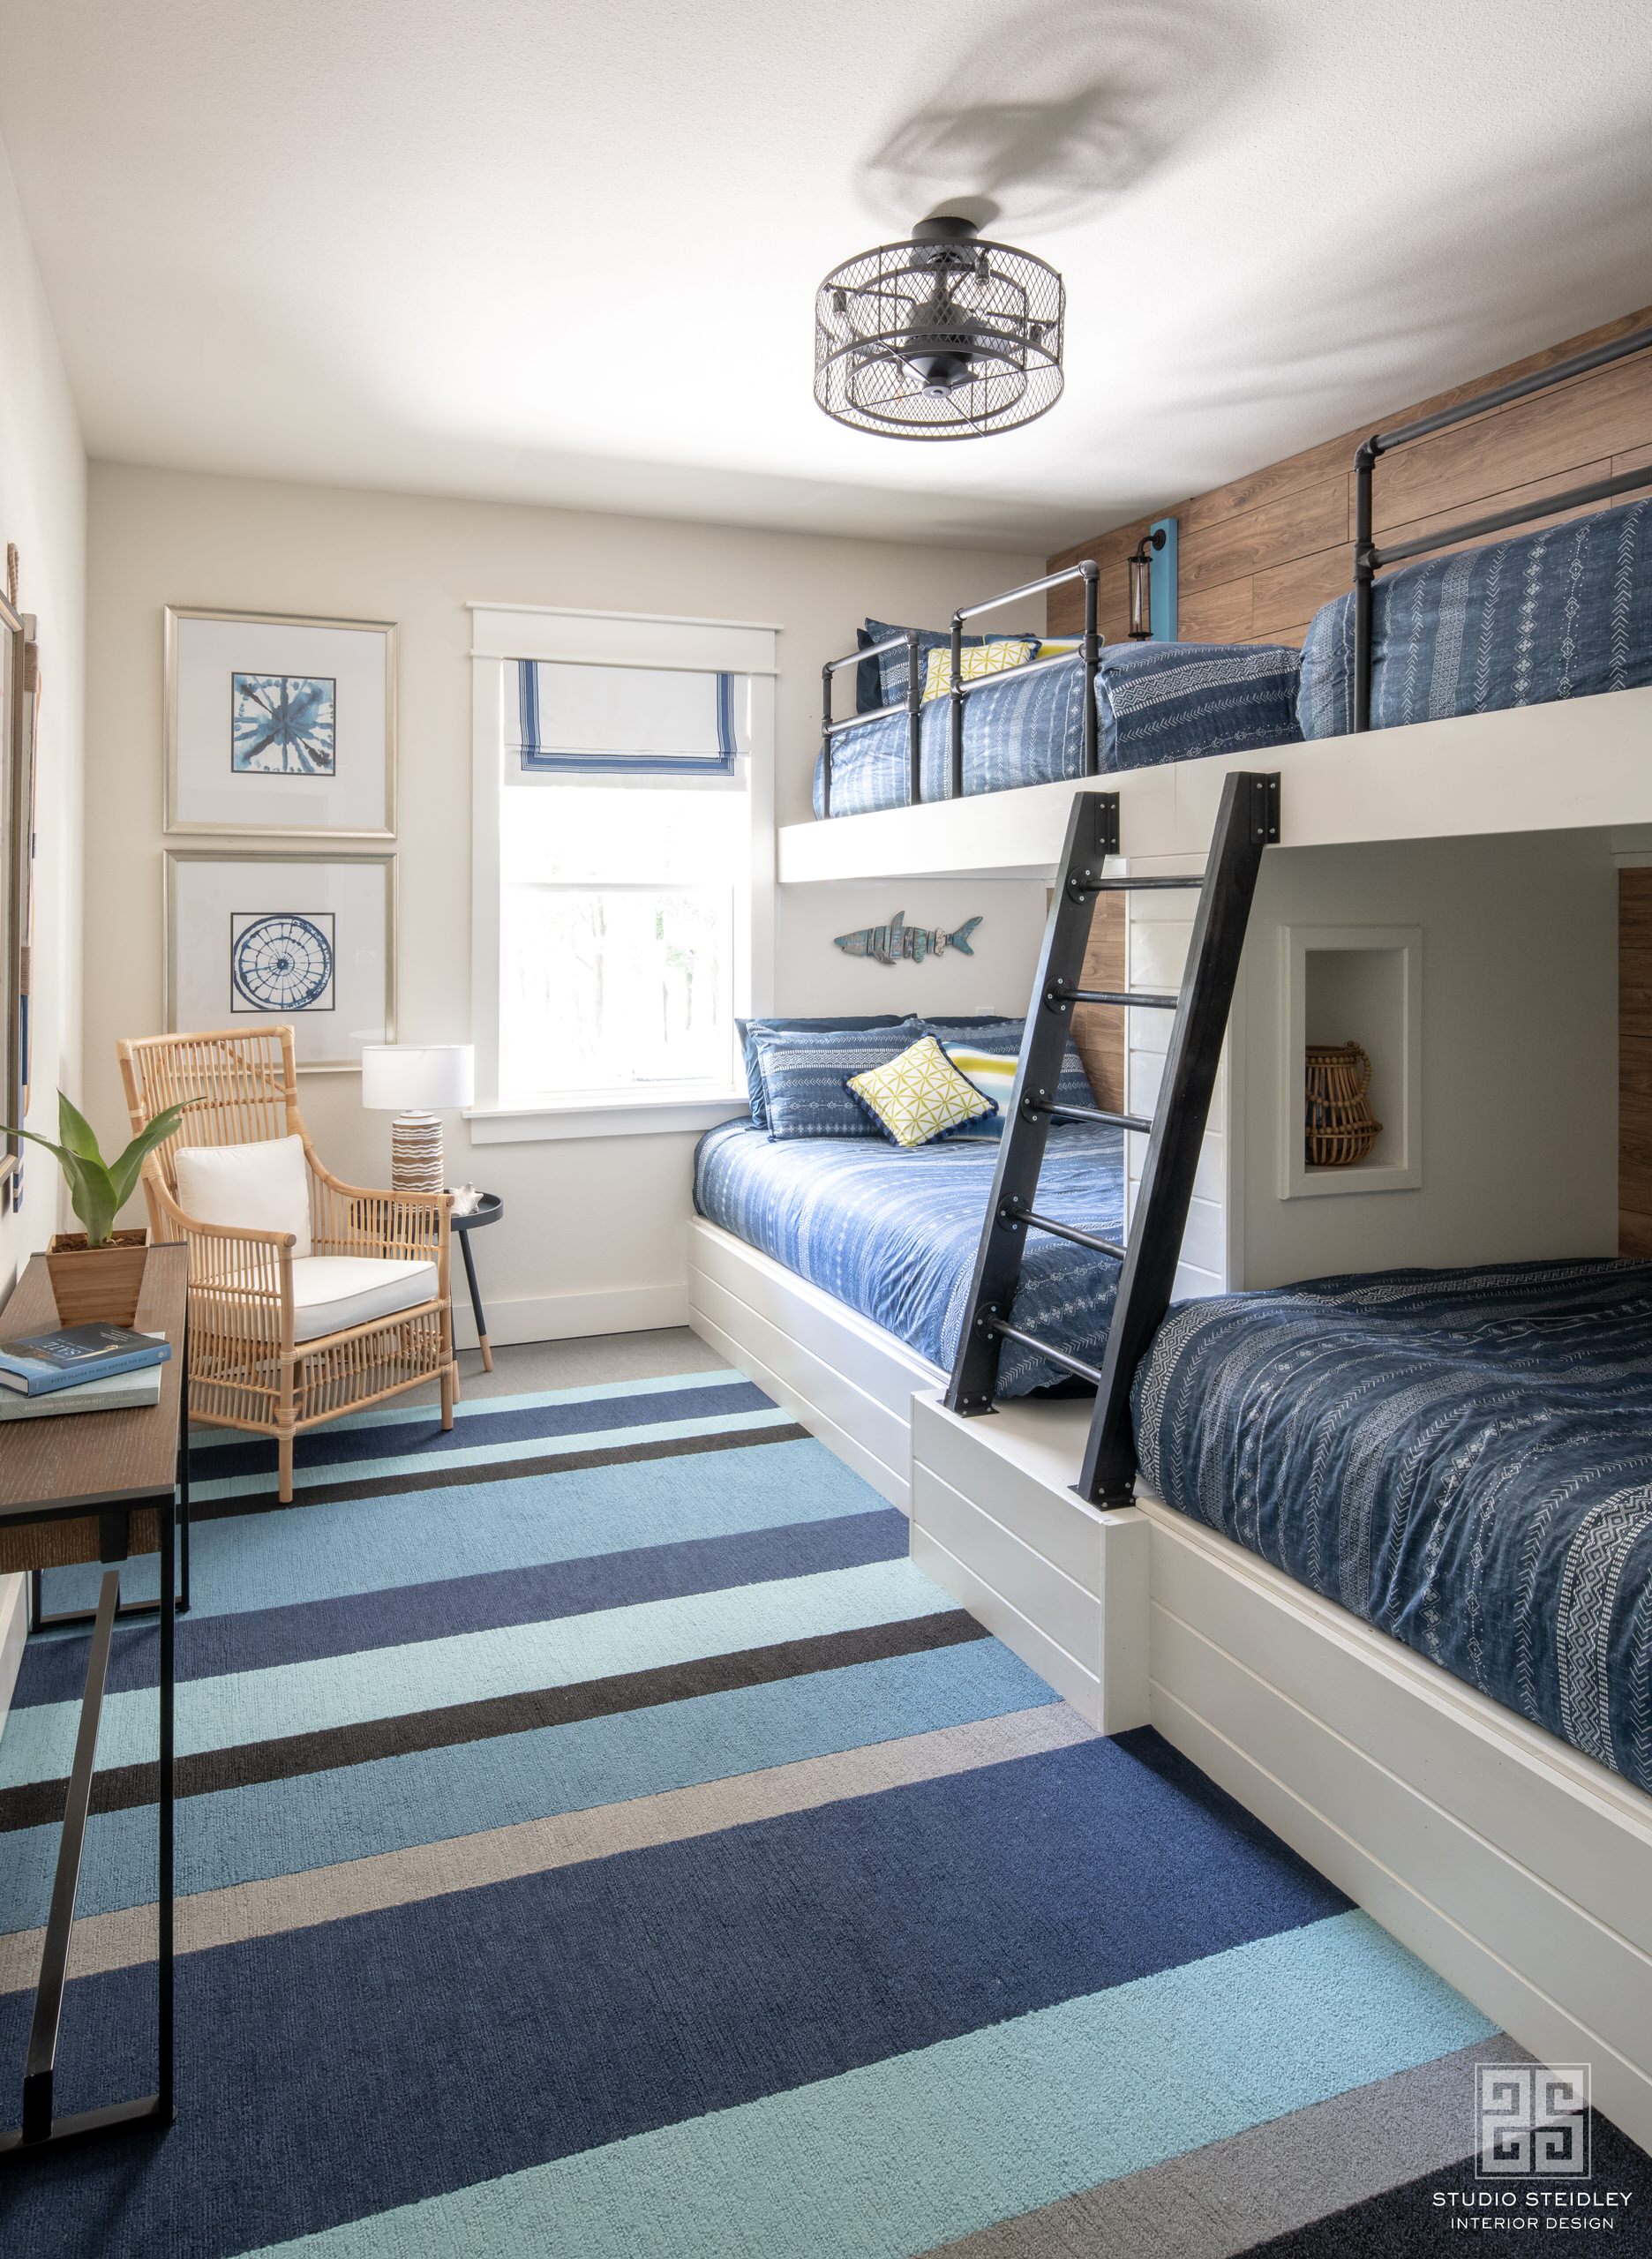 75 Modern Bedroom Ideas You Ll Love